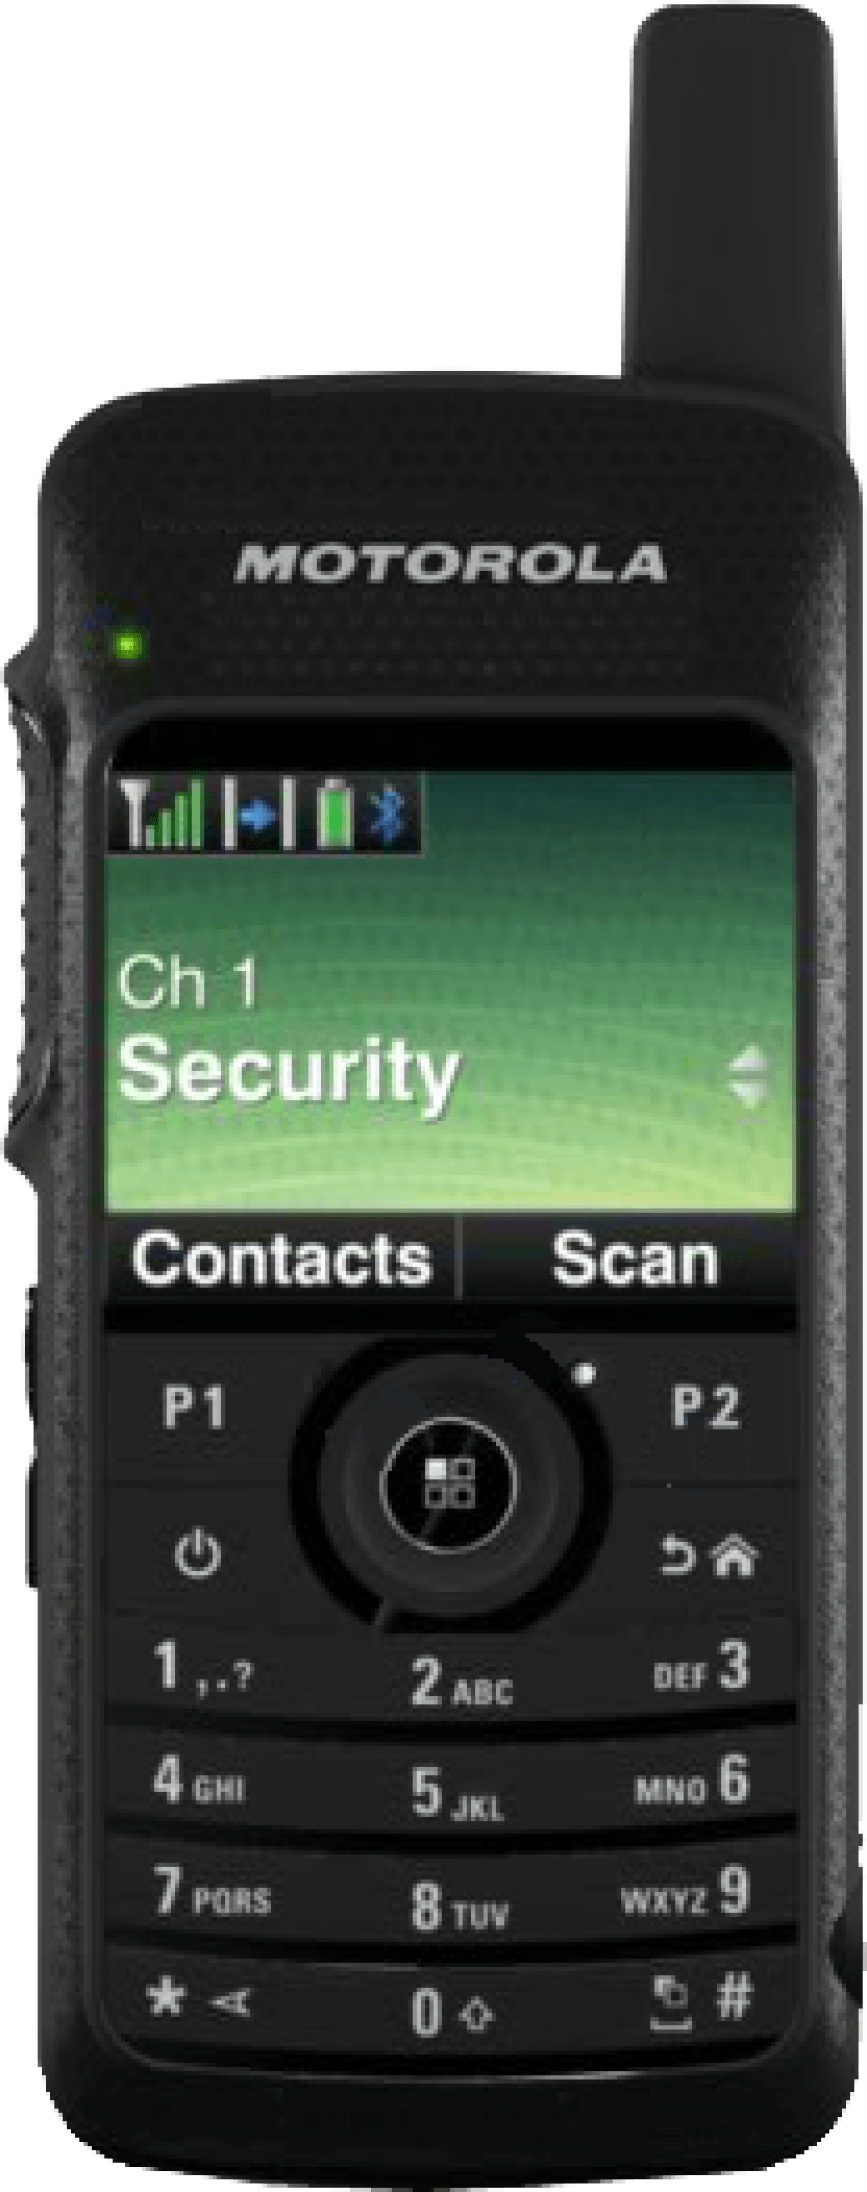 Motorola SL4000e featured image